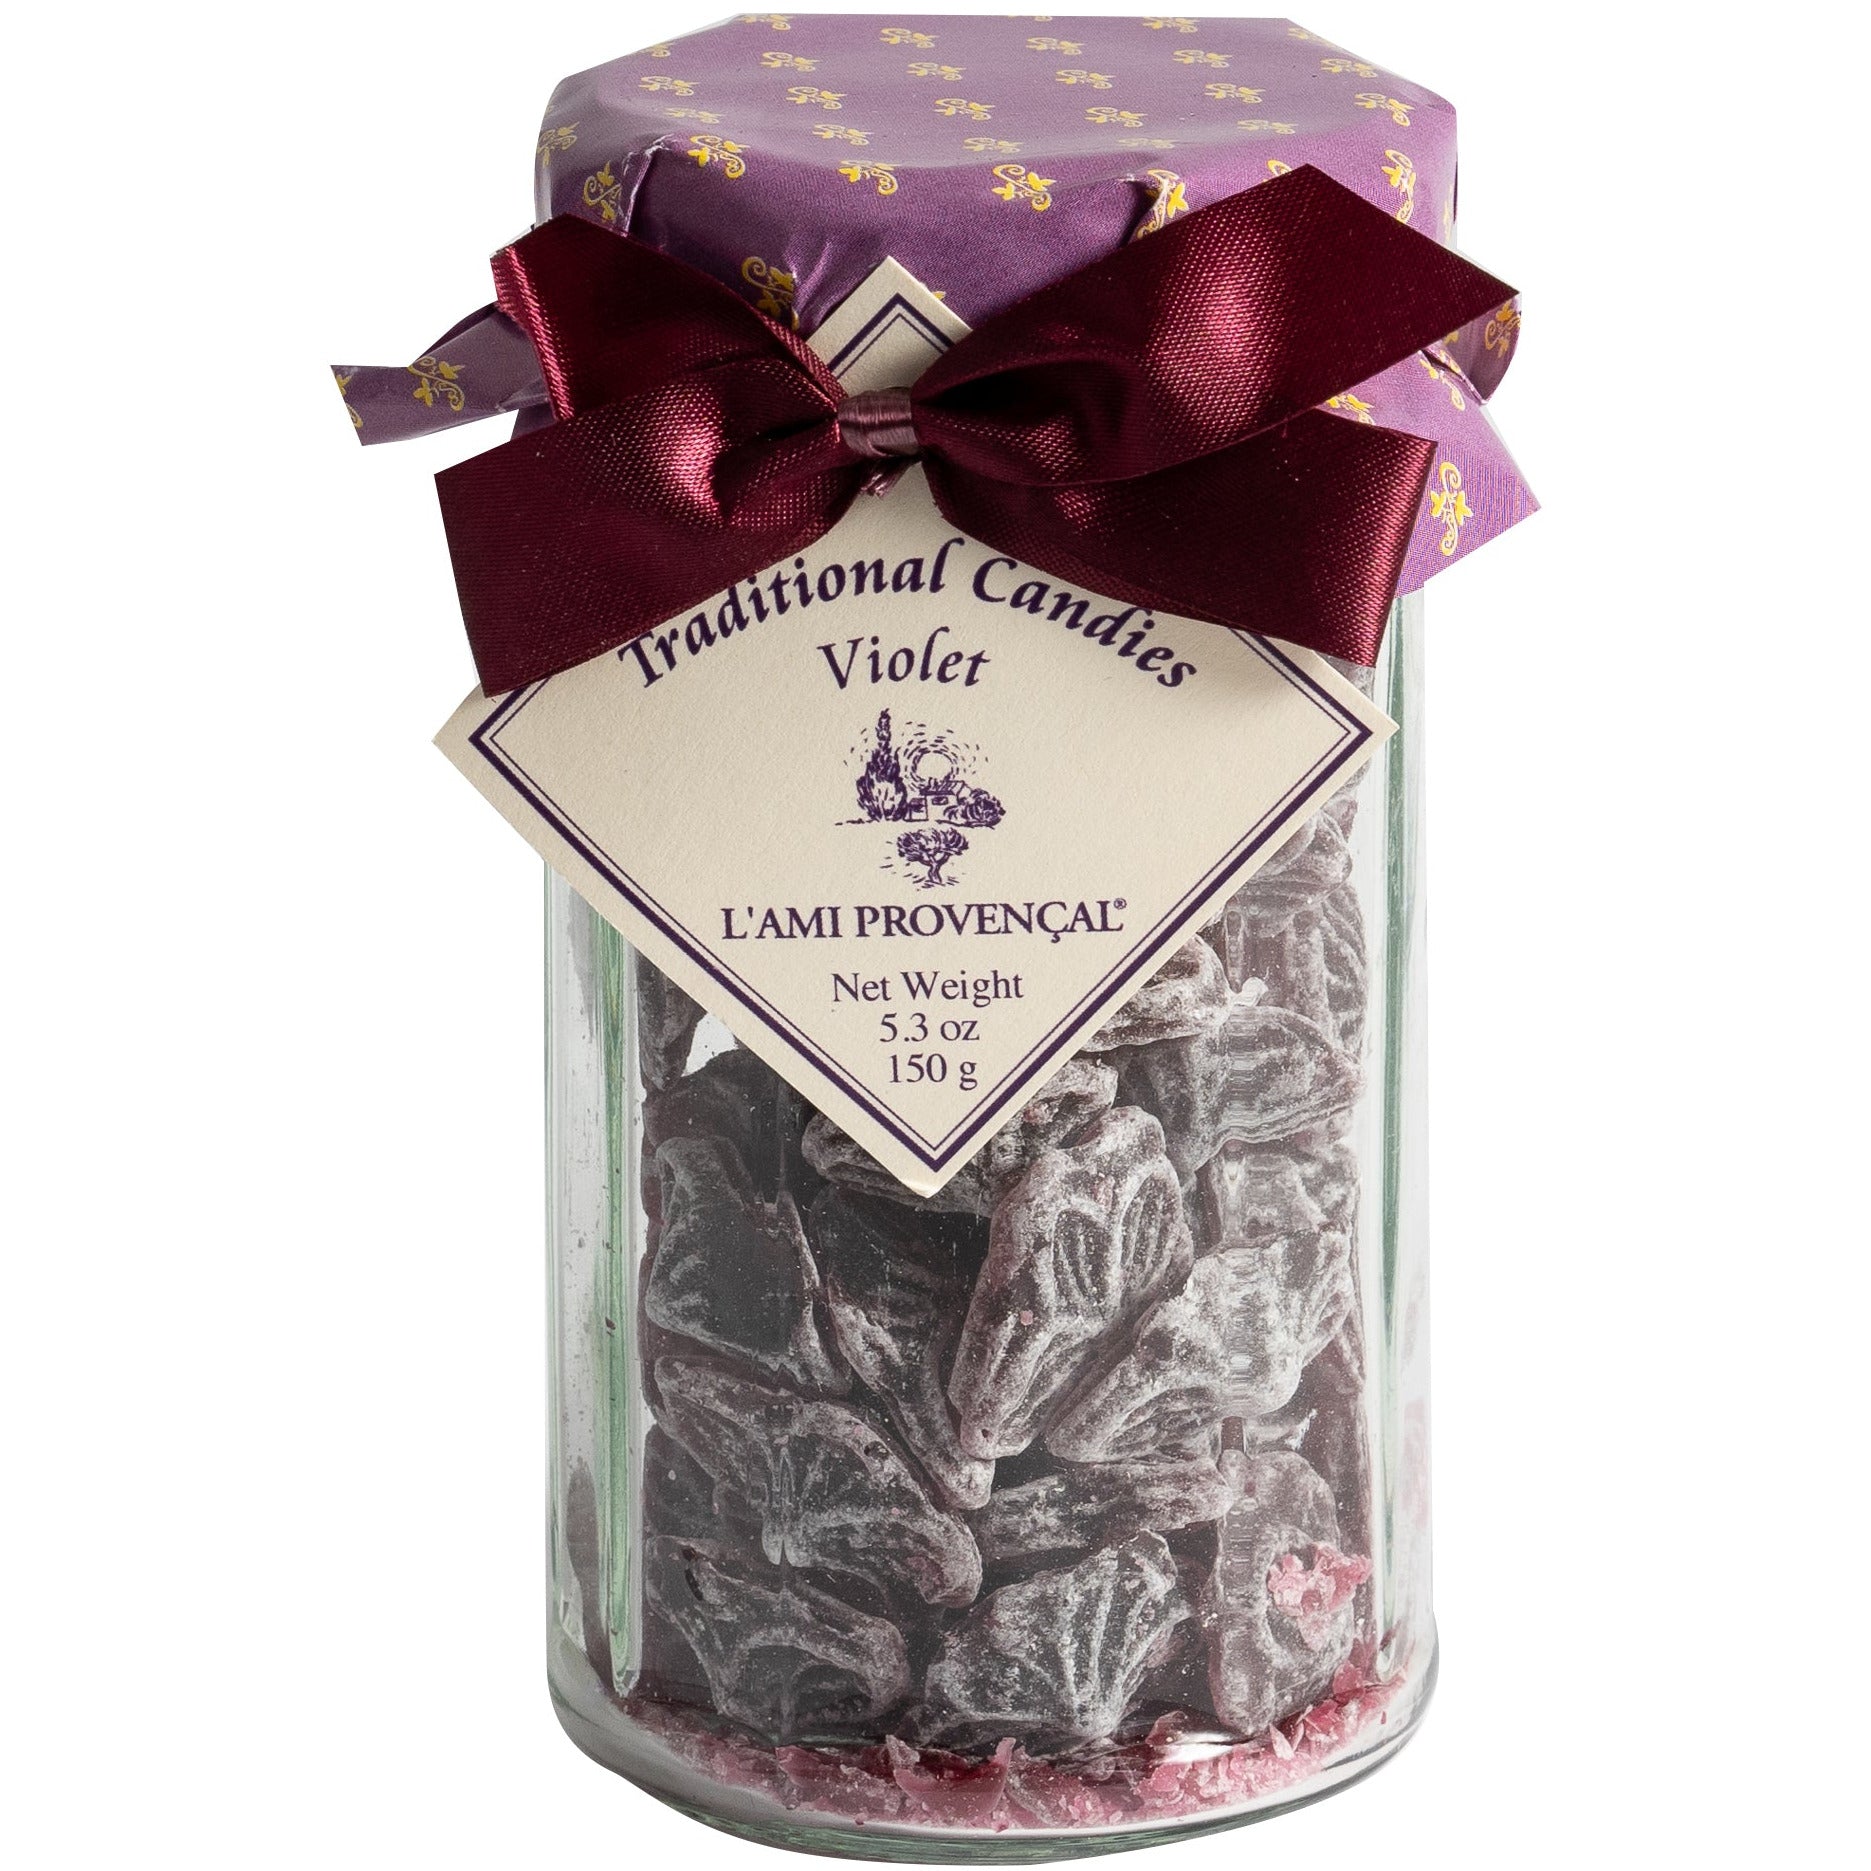 Caramelos tradicionales franceses de violeta (violeta)